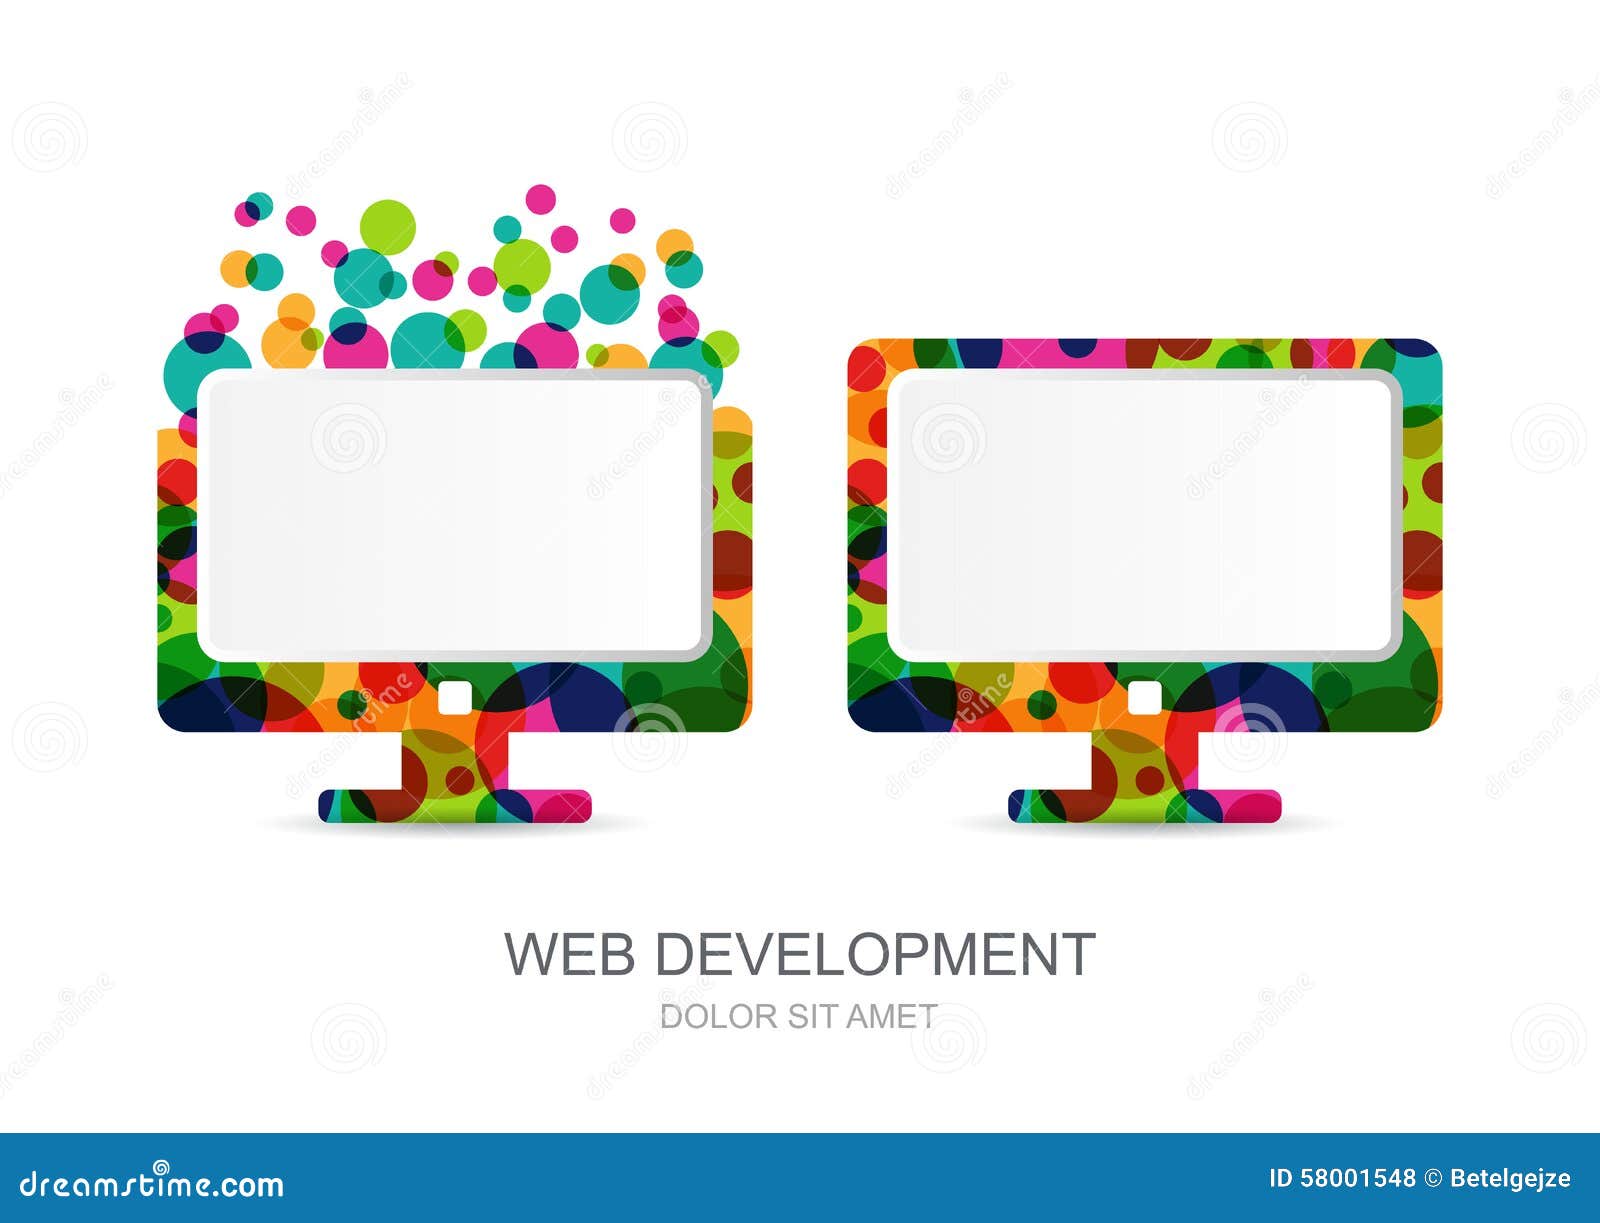 internet application and web development